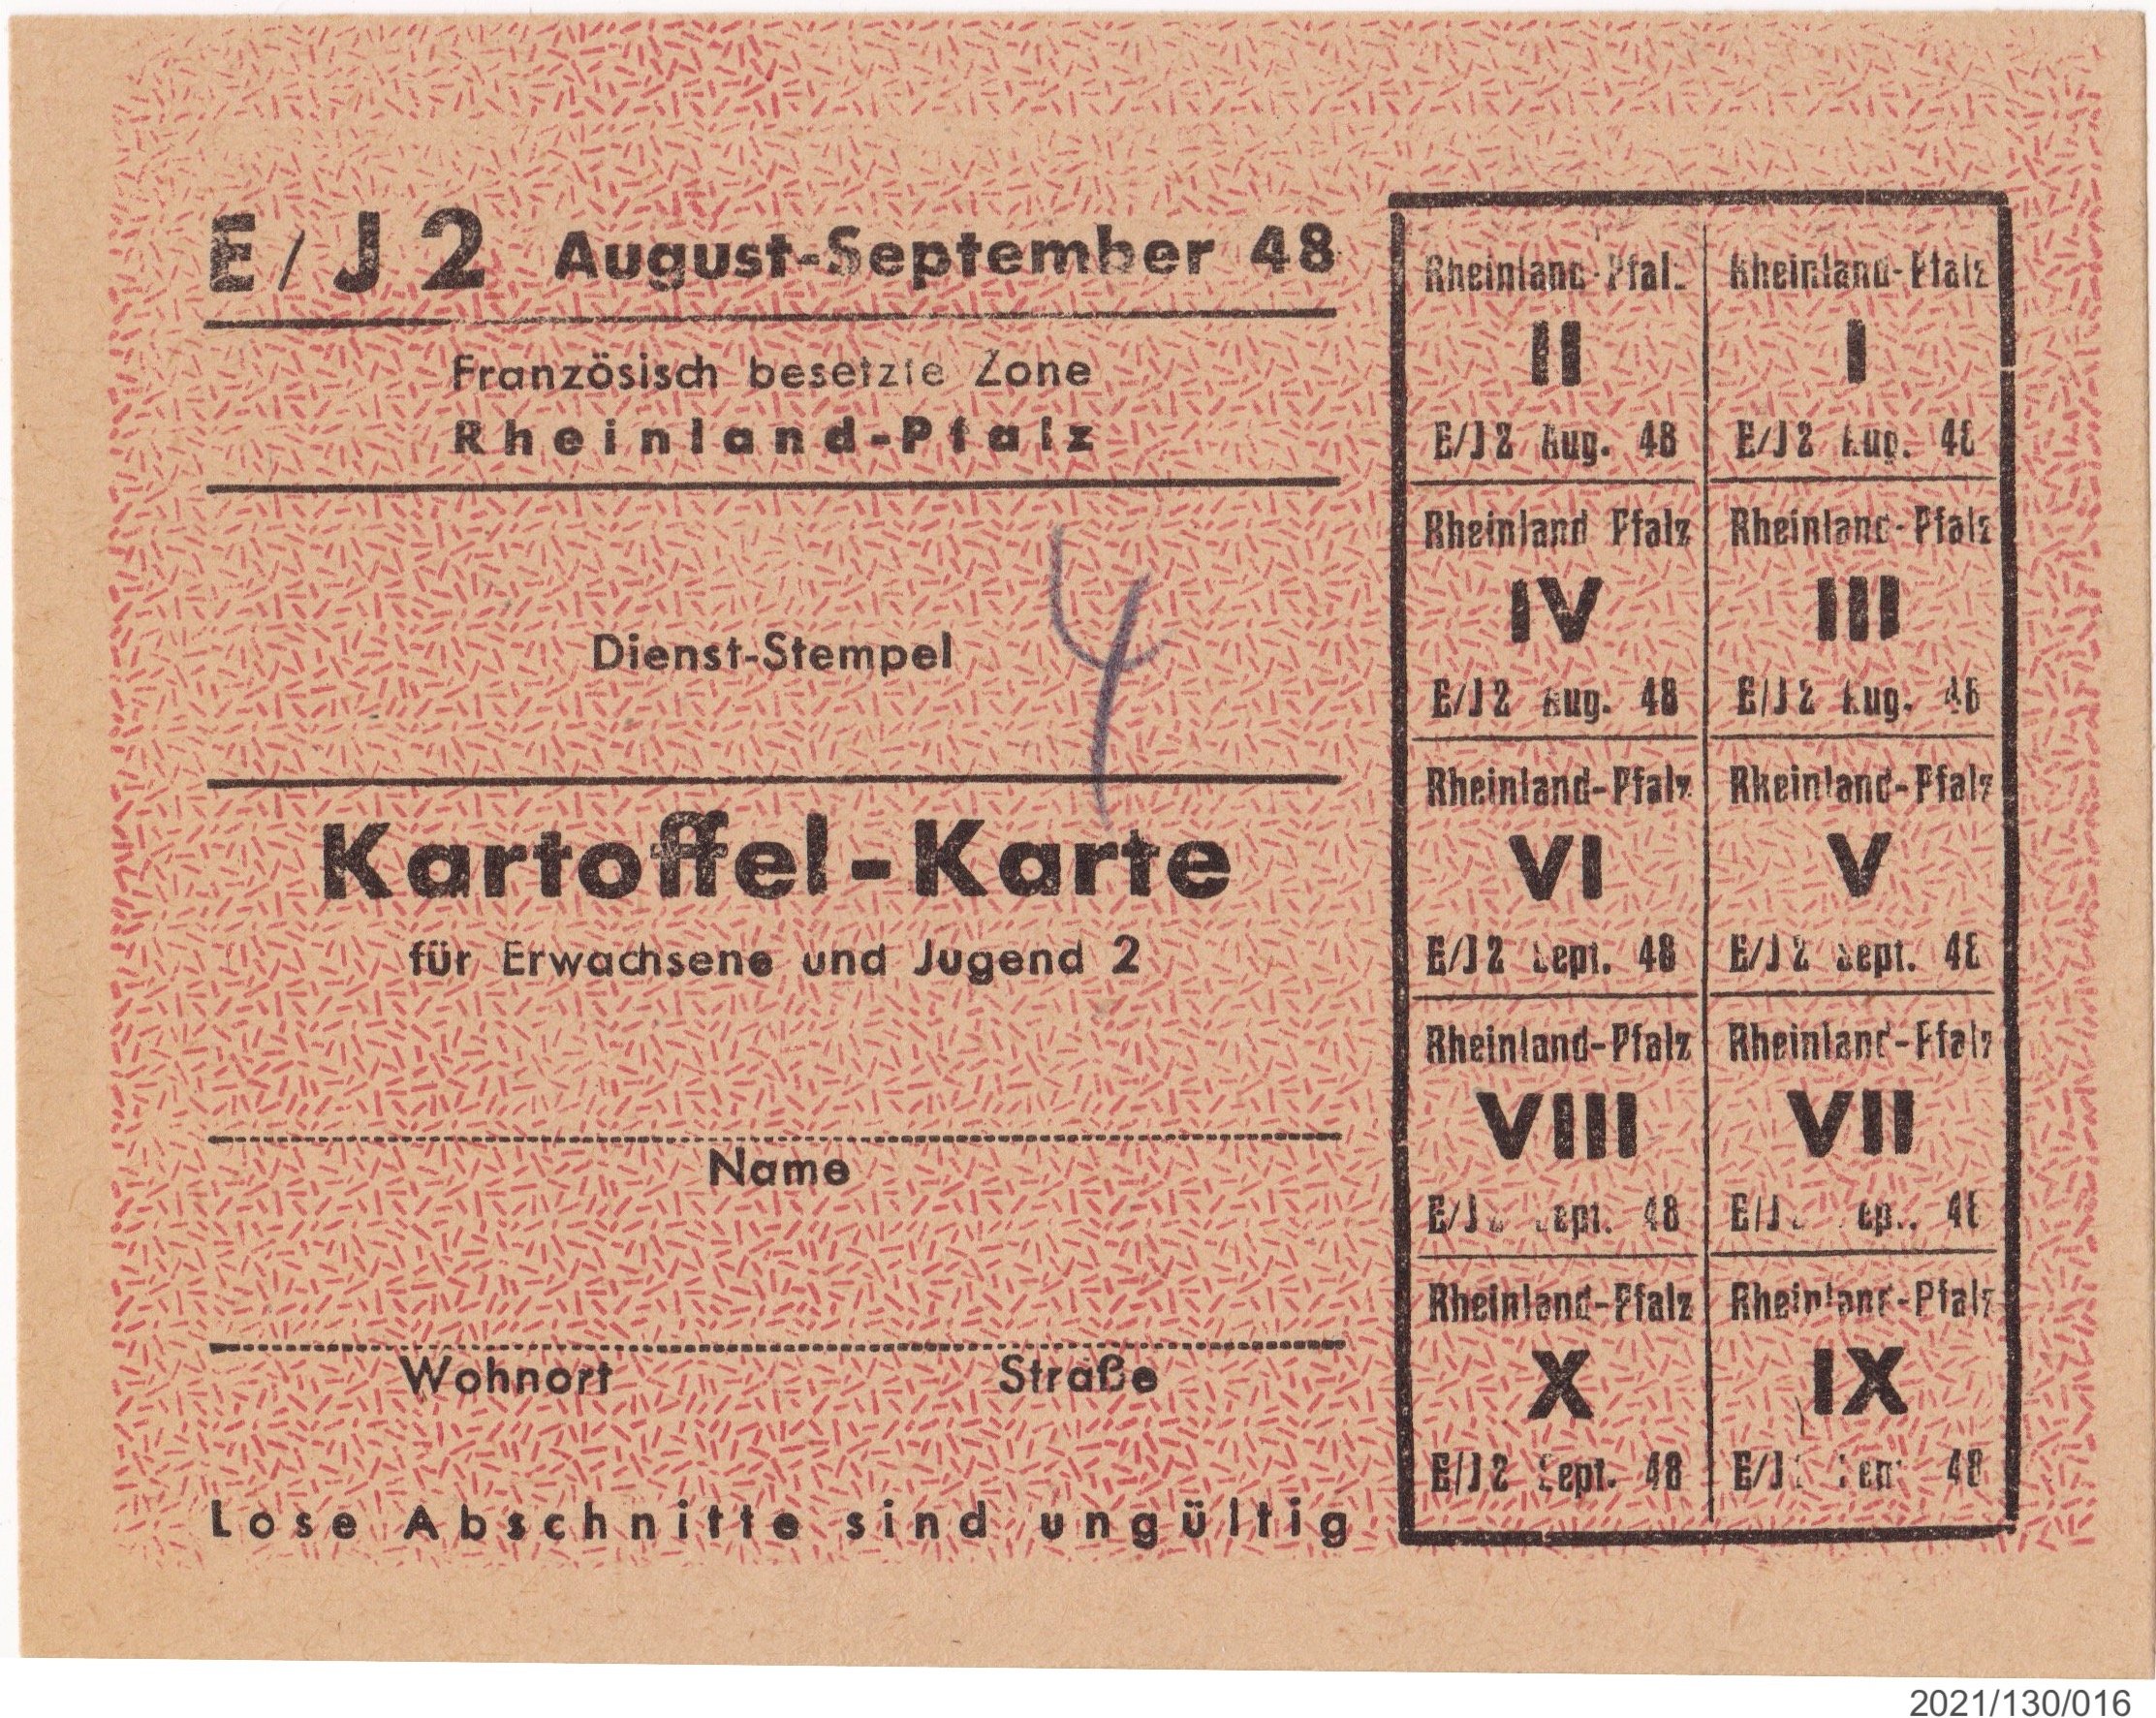 Kartoffelkarte August-September 1948 franz. besetzte Zone Rheinland-Pfalz (Museumsgesellschaft Bad Dürkheim e. V. CC BY-NC-SA)